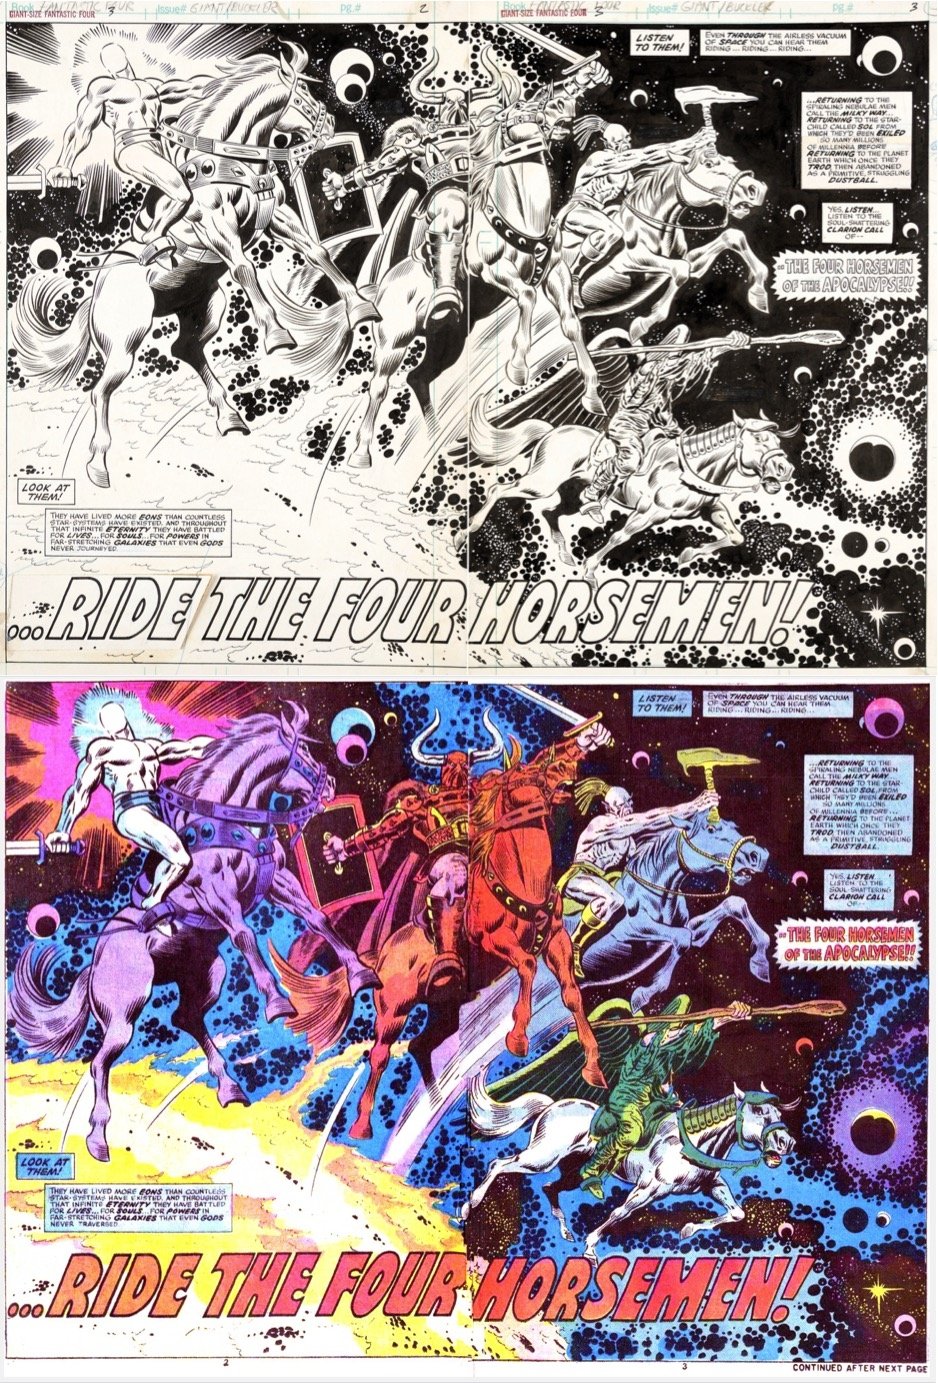 Giant Size Fantastic Four 3 P2 3 1974 1st App Four Horsemen Of The Apocalypse In Dino Mauricio S Marvel Splashes Panels Comic Art Gallery Room